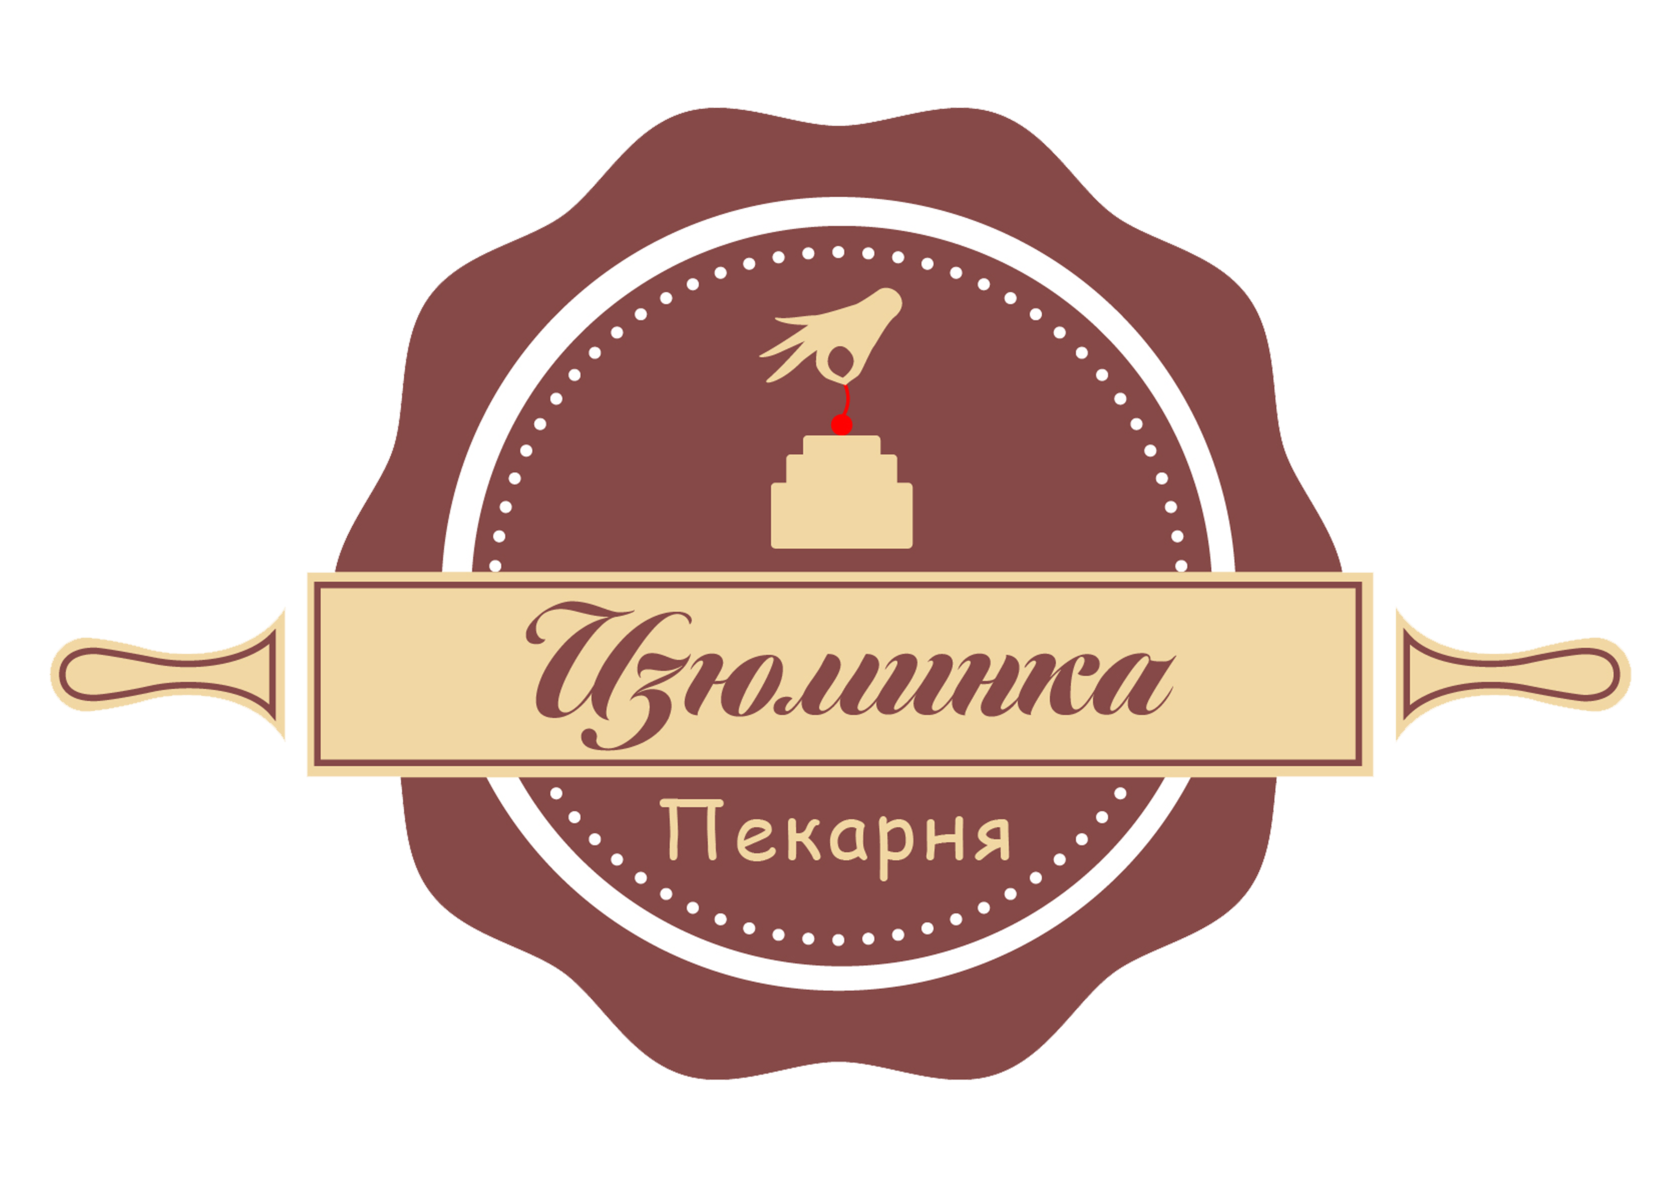 Пекарня изюминка. Логотип пекарни. Изюминка логотип. Пекарня изюминка Оренбург.